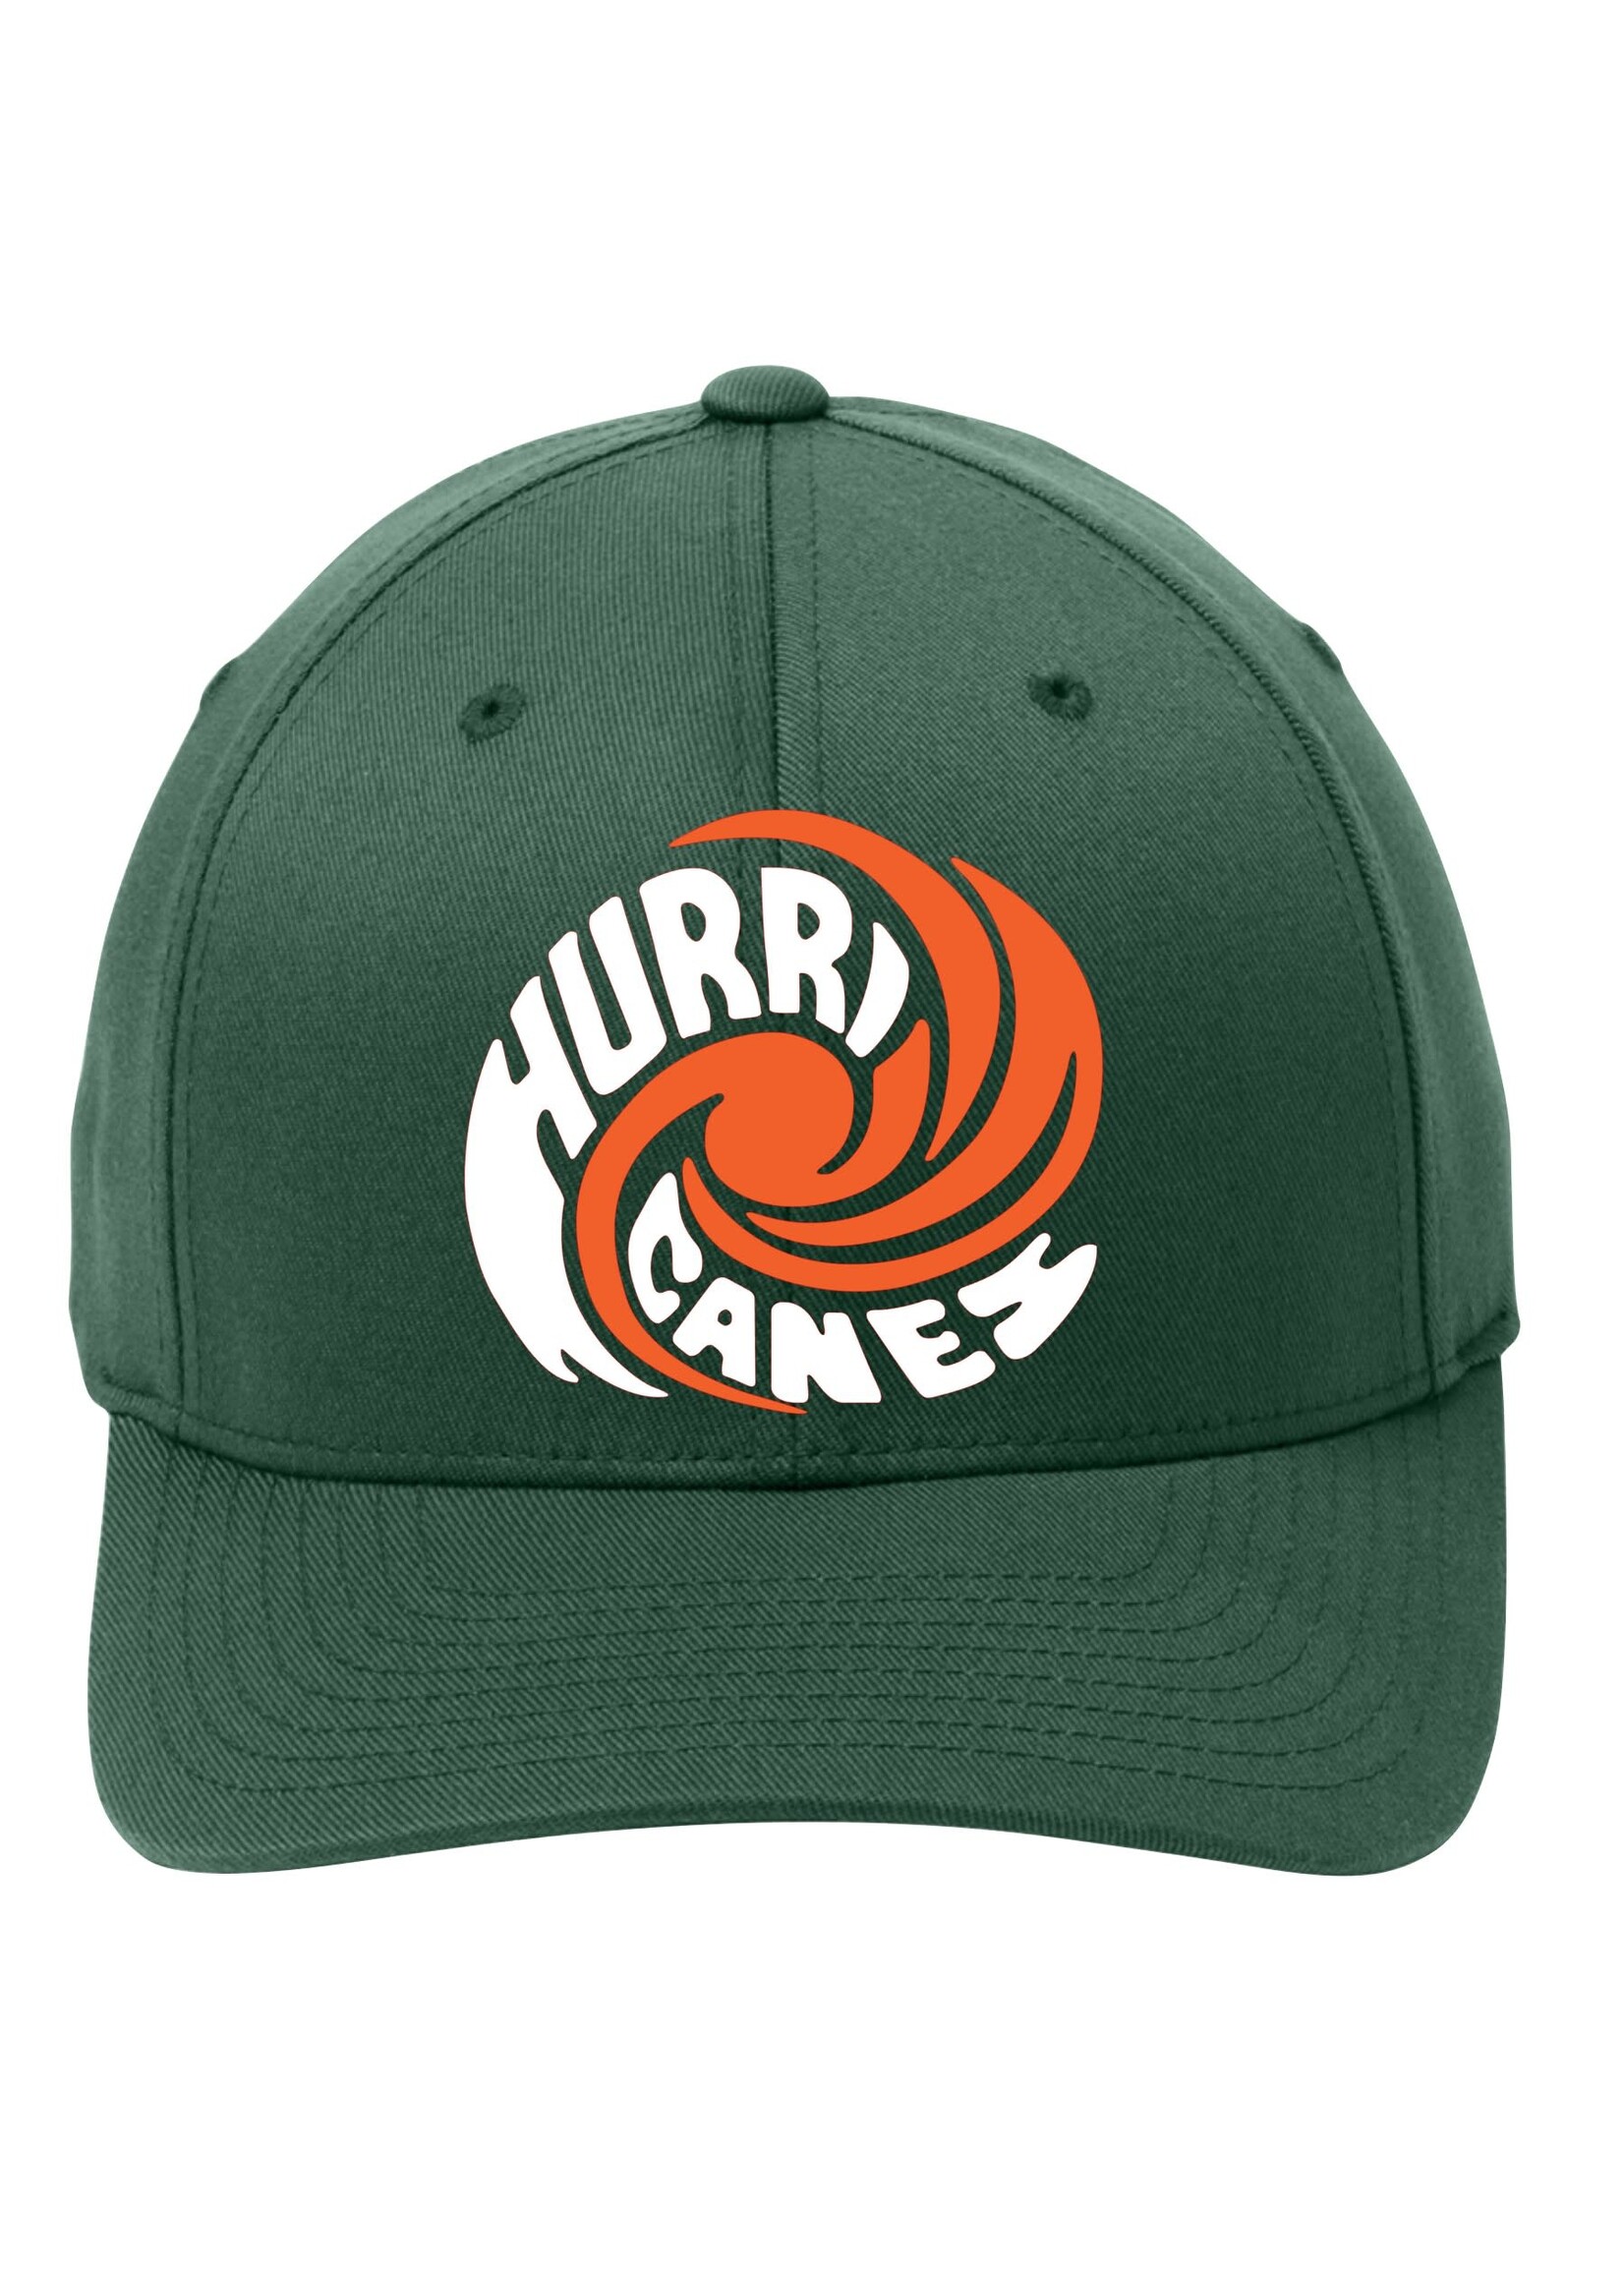 Ed Lark Hurricanes Swirl Fitted Hat